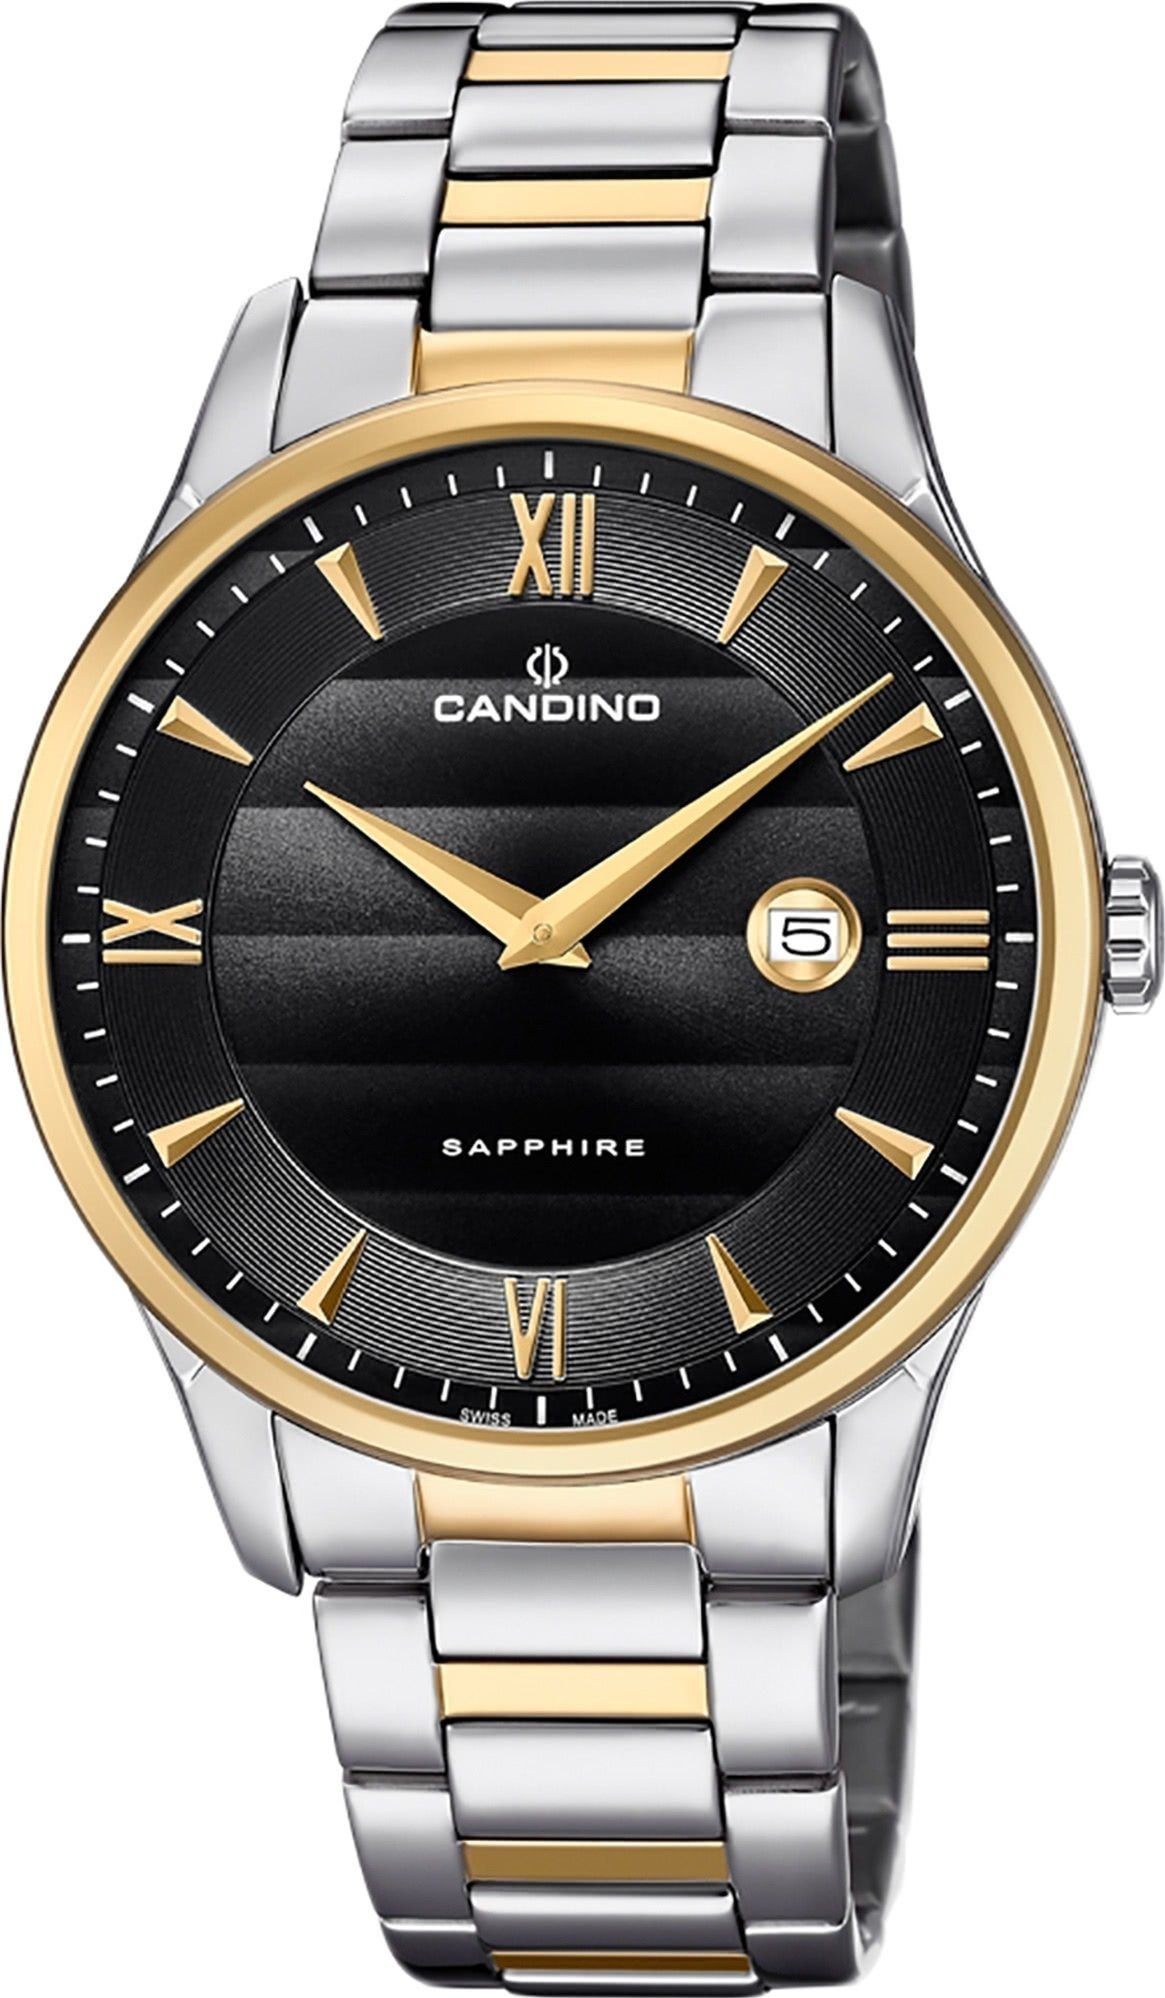 Elegant Quarzuhr C4639/4, Edelstahlarmband Armbanduhr Herren Analog silber, Herren Candino gold, rund, Candino Uhr